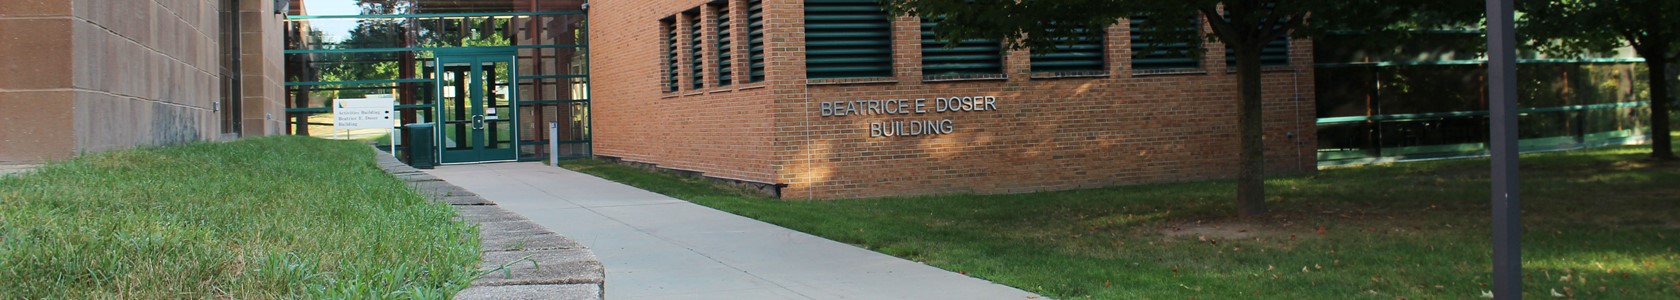 ɫ's Sidney campus, Beatrice E. Doser Building